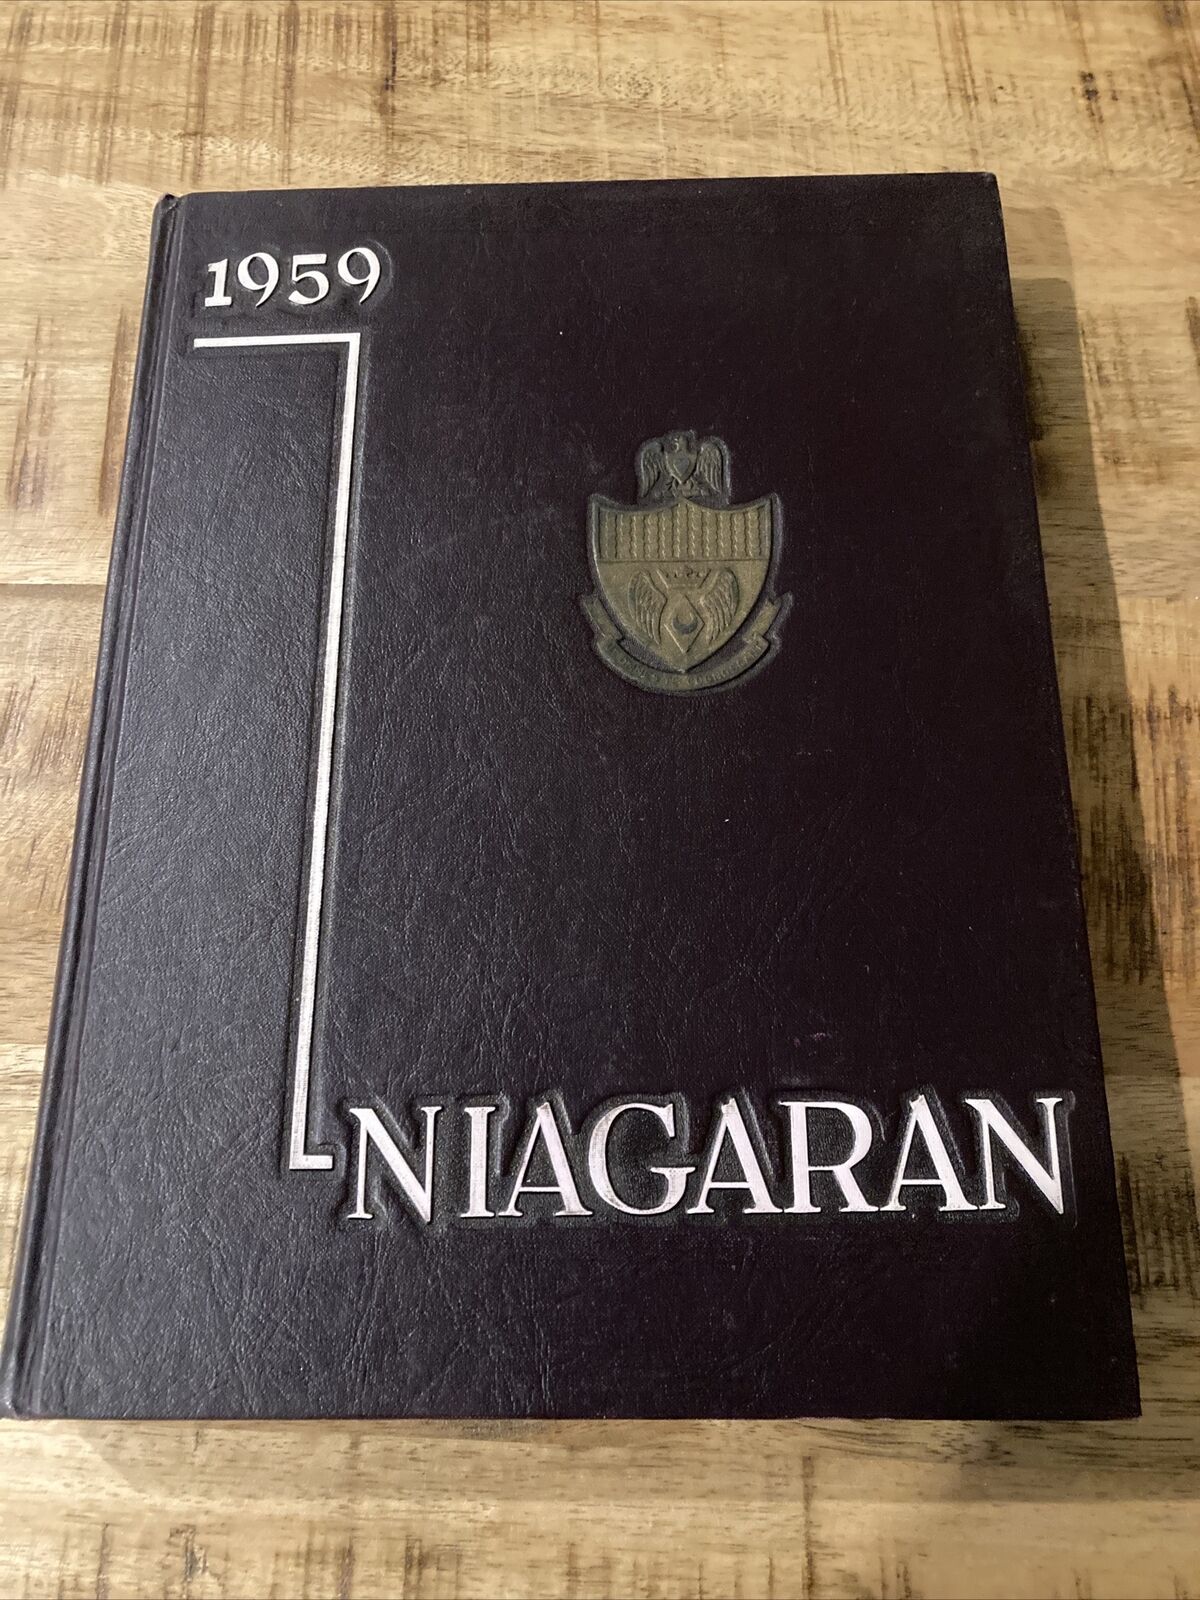 1959 Niagarian Niagara Falls High School, Niagara Falls NY Annual Year Book